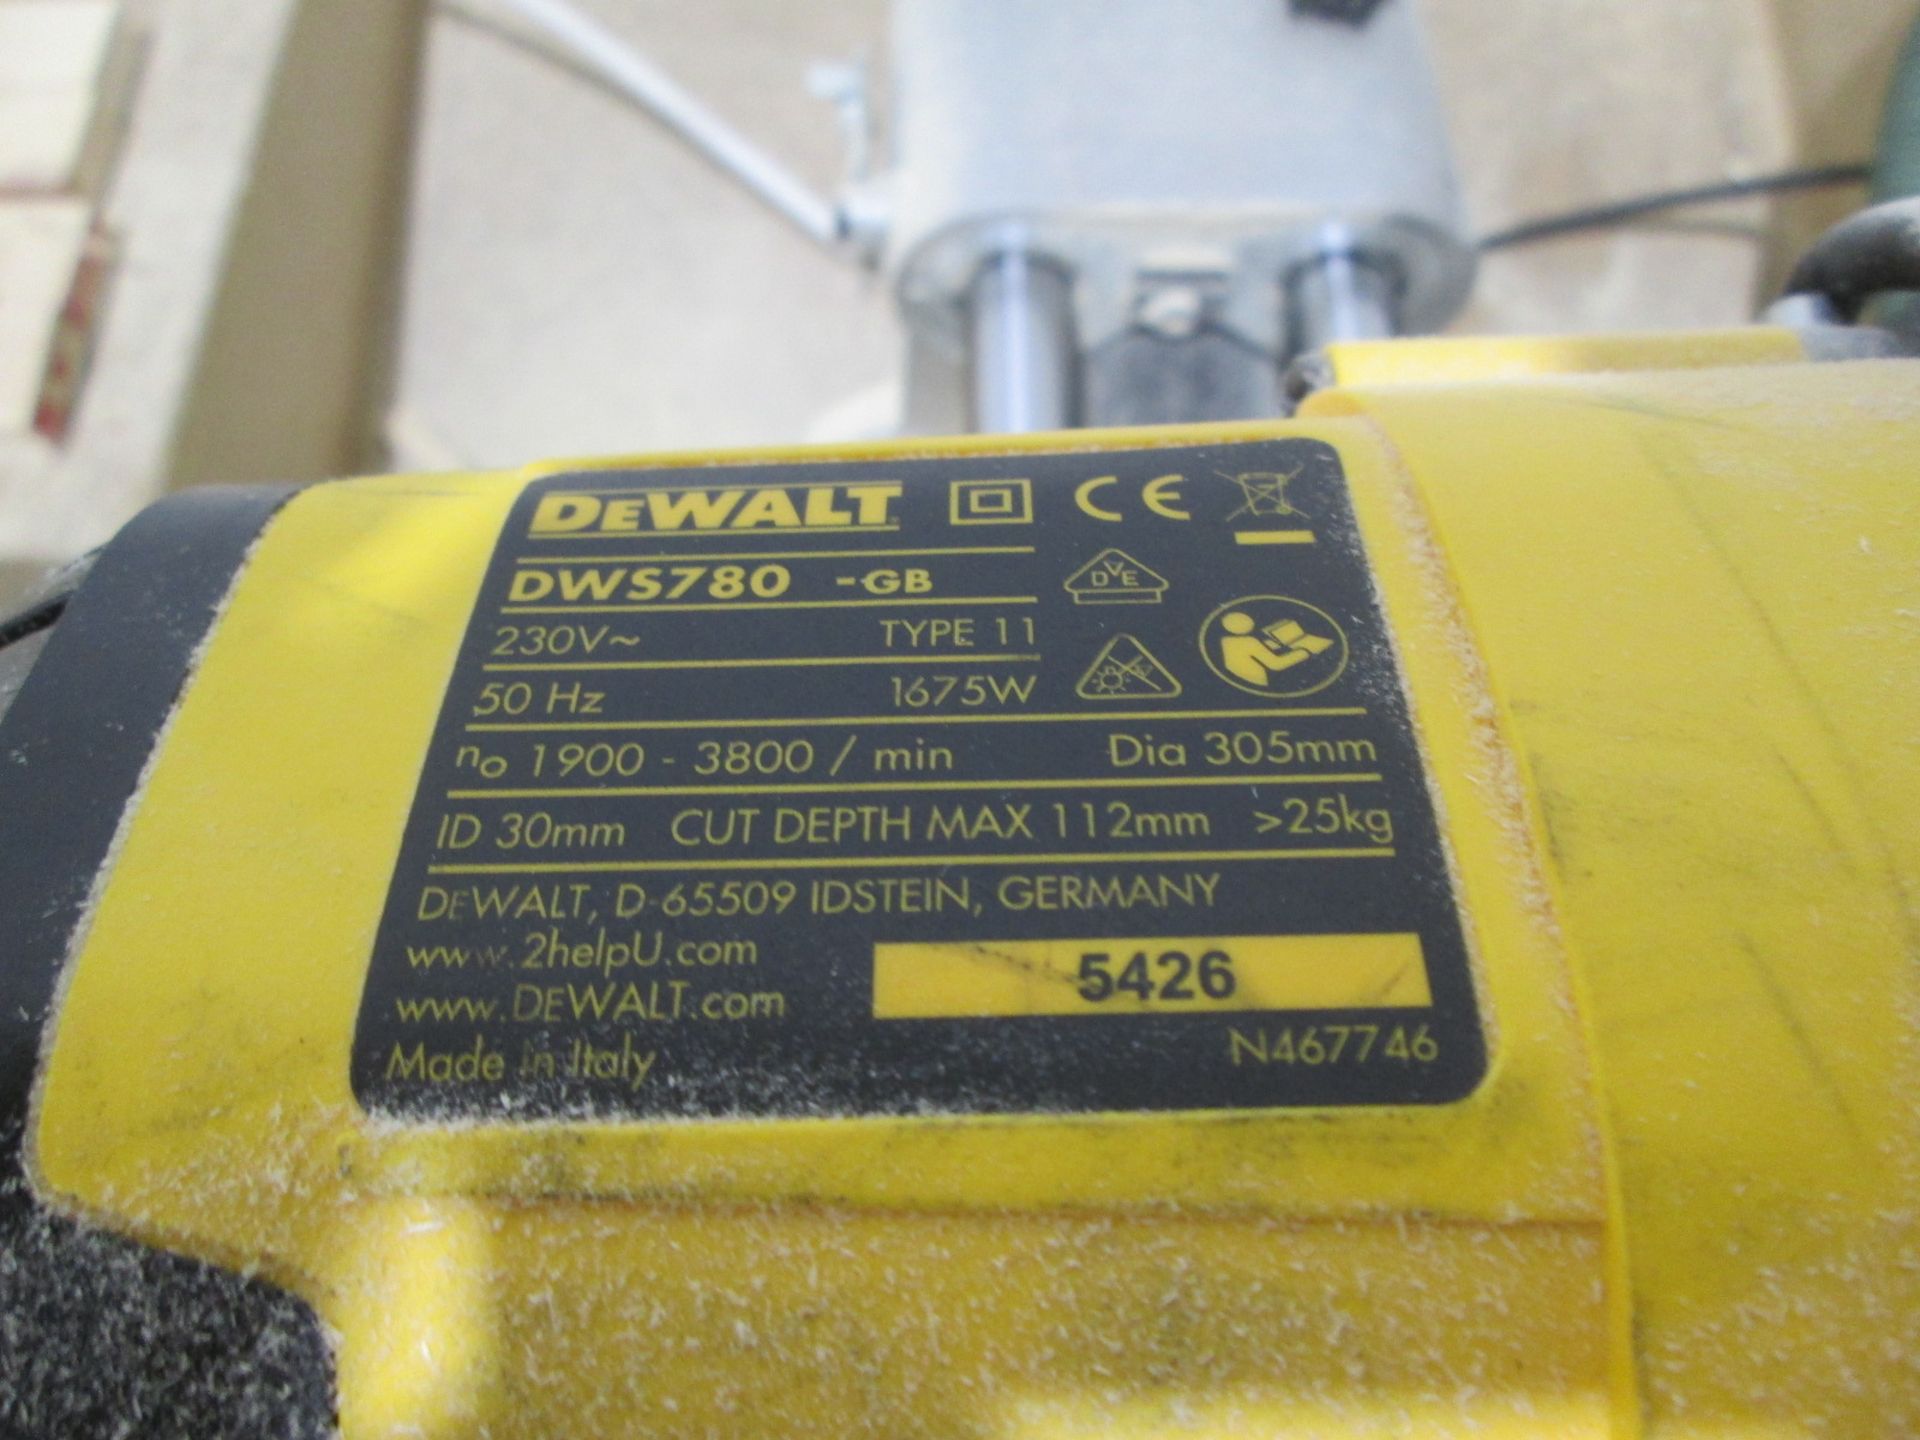 DeWalt DWS 780 Sliding Cross Cut Mitre Saw, S/N 5426 - Image 4 of 5